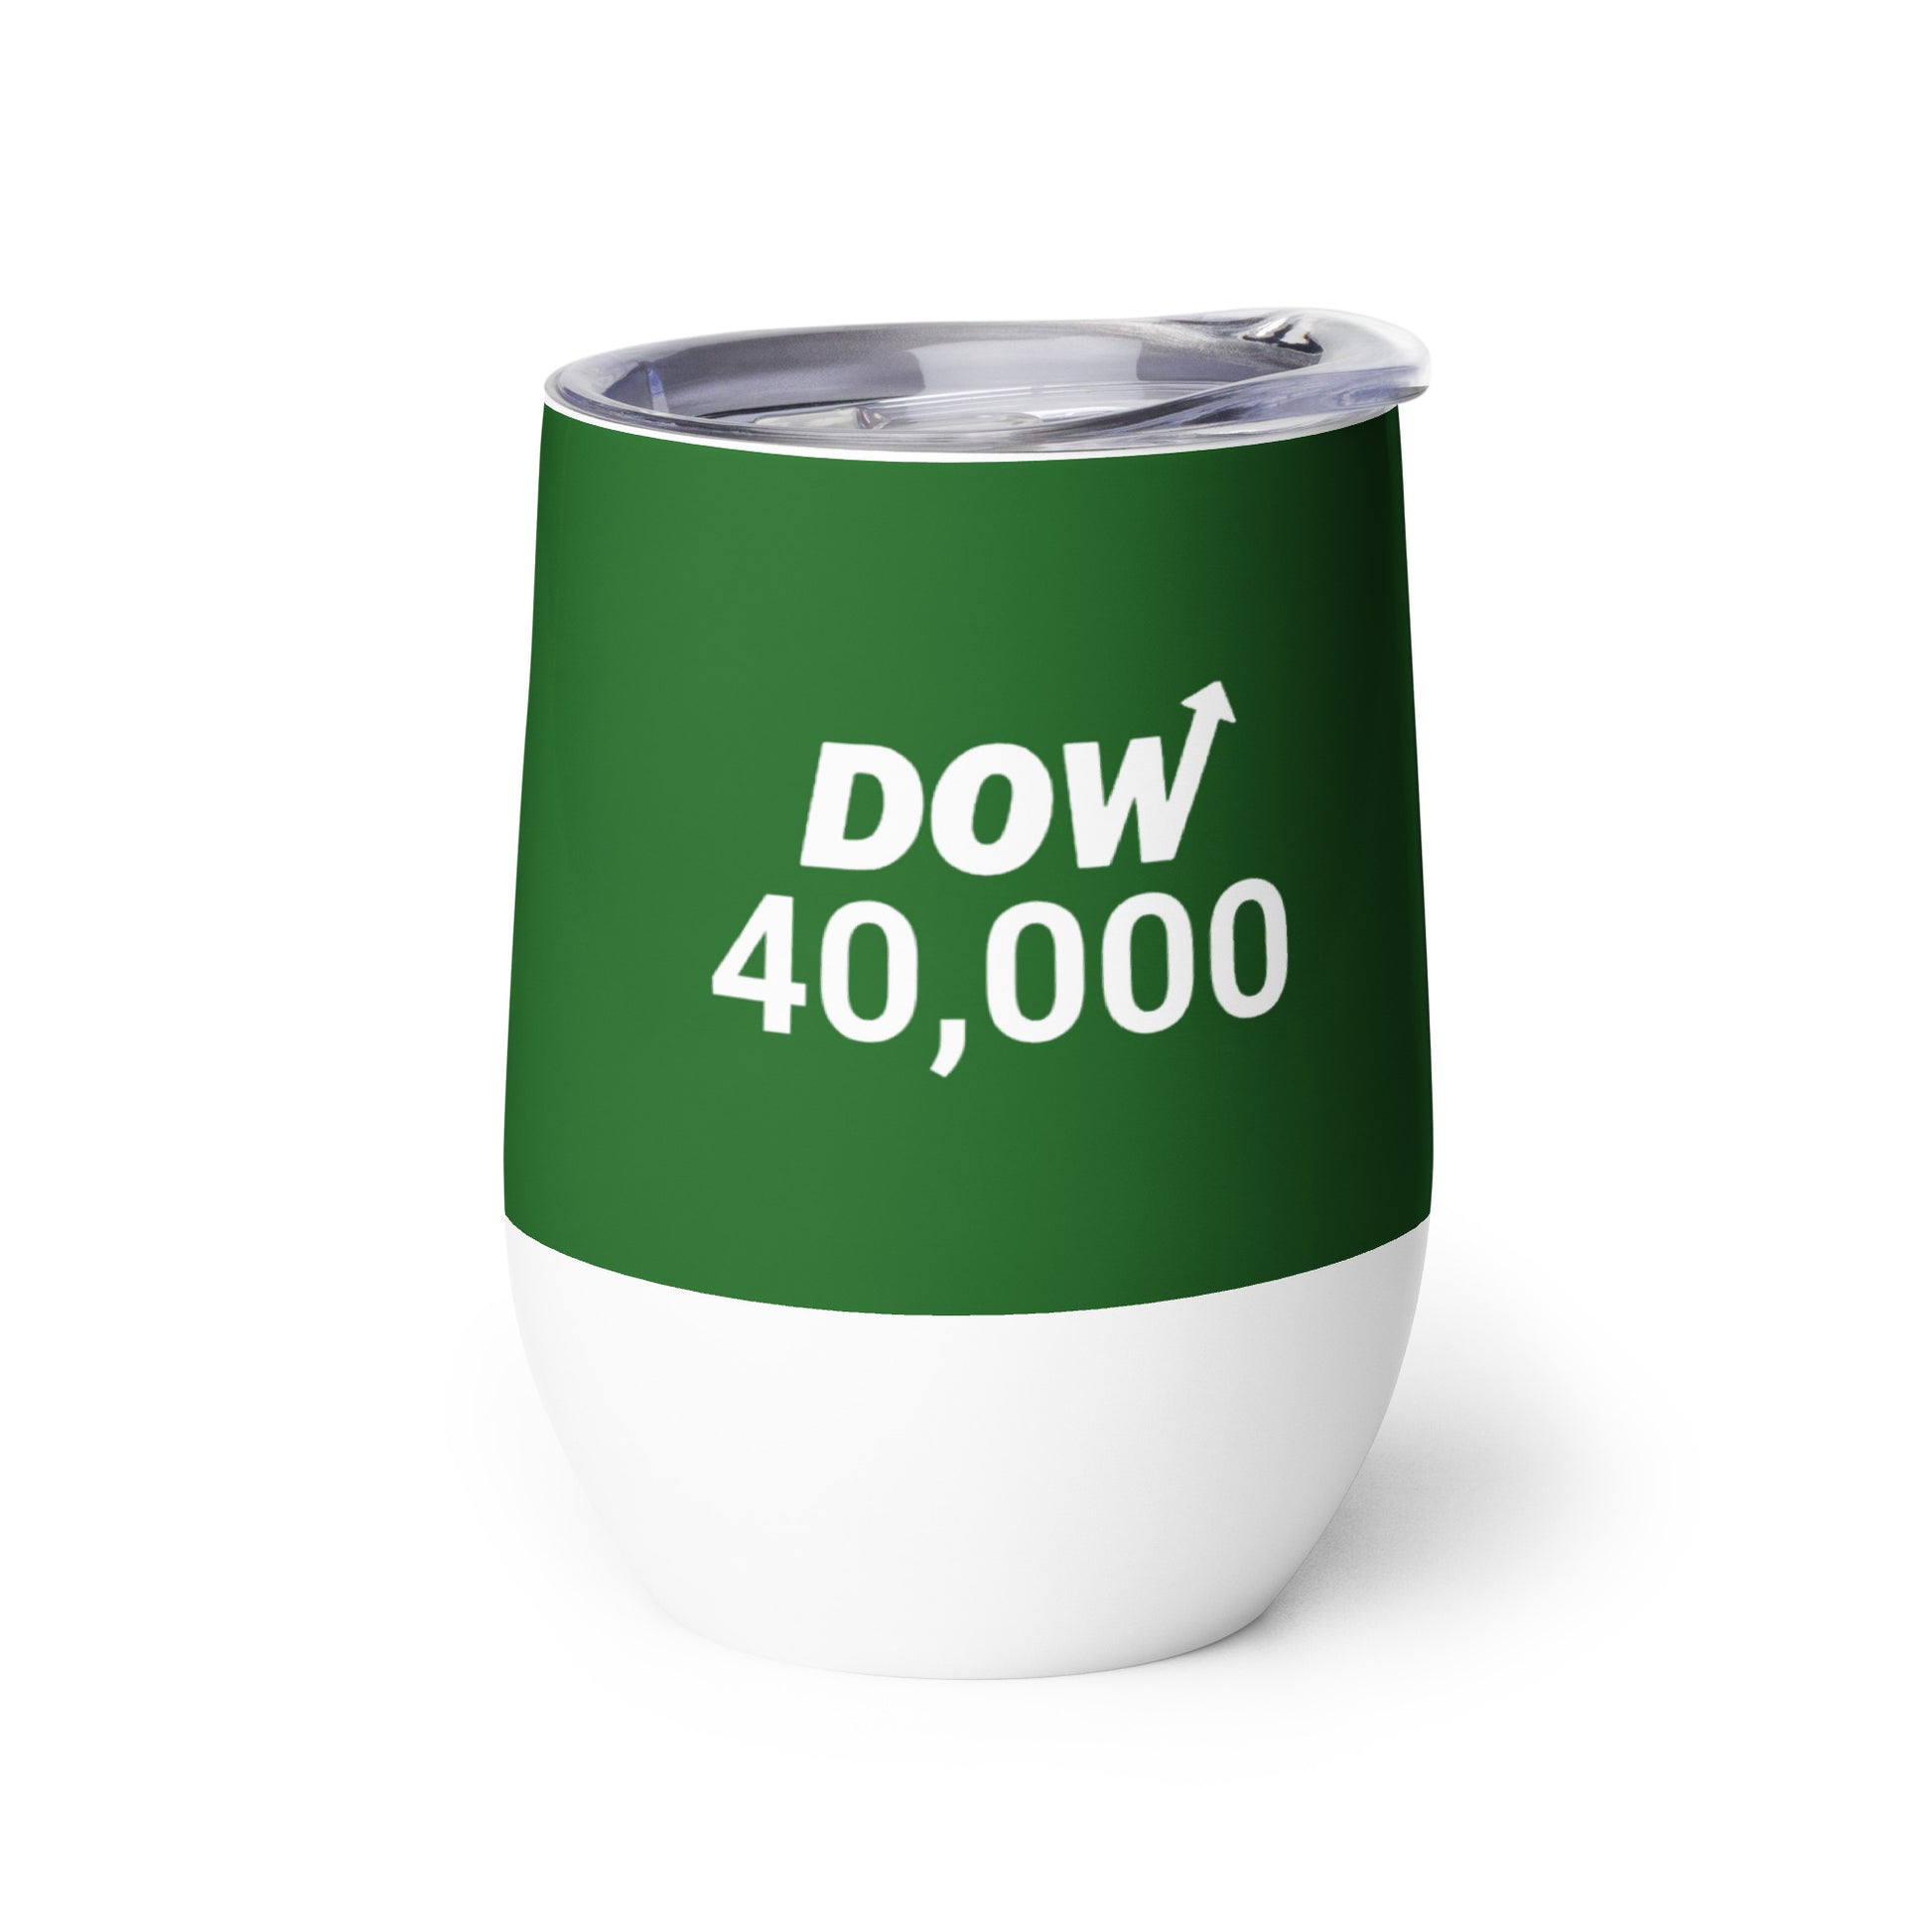 Dow 40.000 Wine tumbler / Dow 40k Wine tumbler